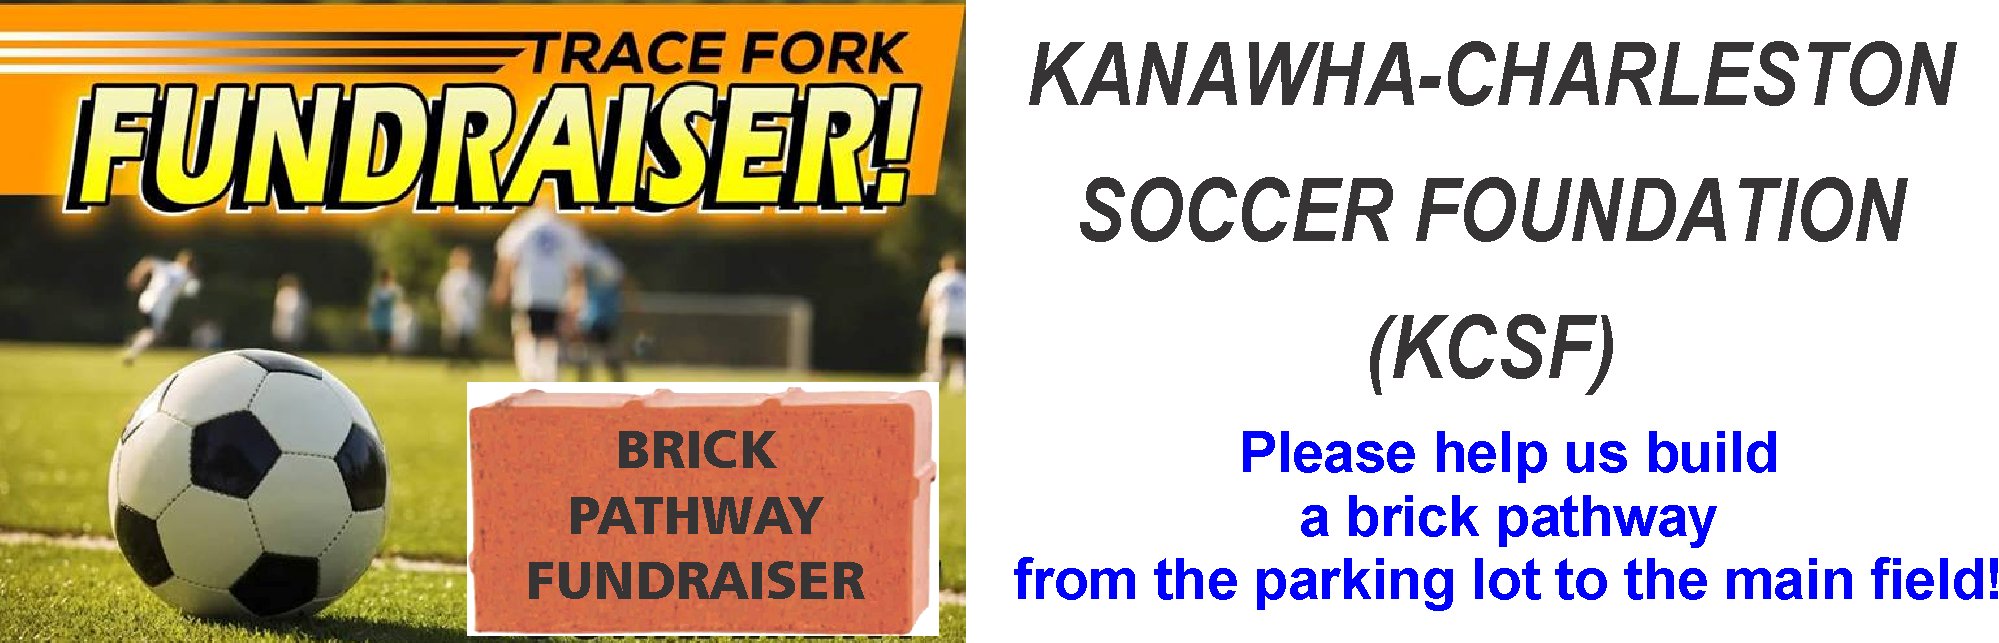 Kanawha-Charleston Soccer Foundation Brick Fundraiser